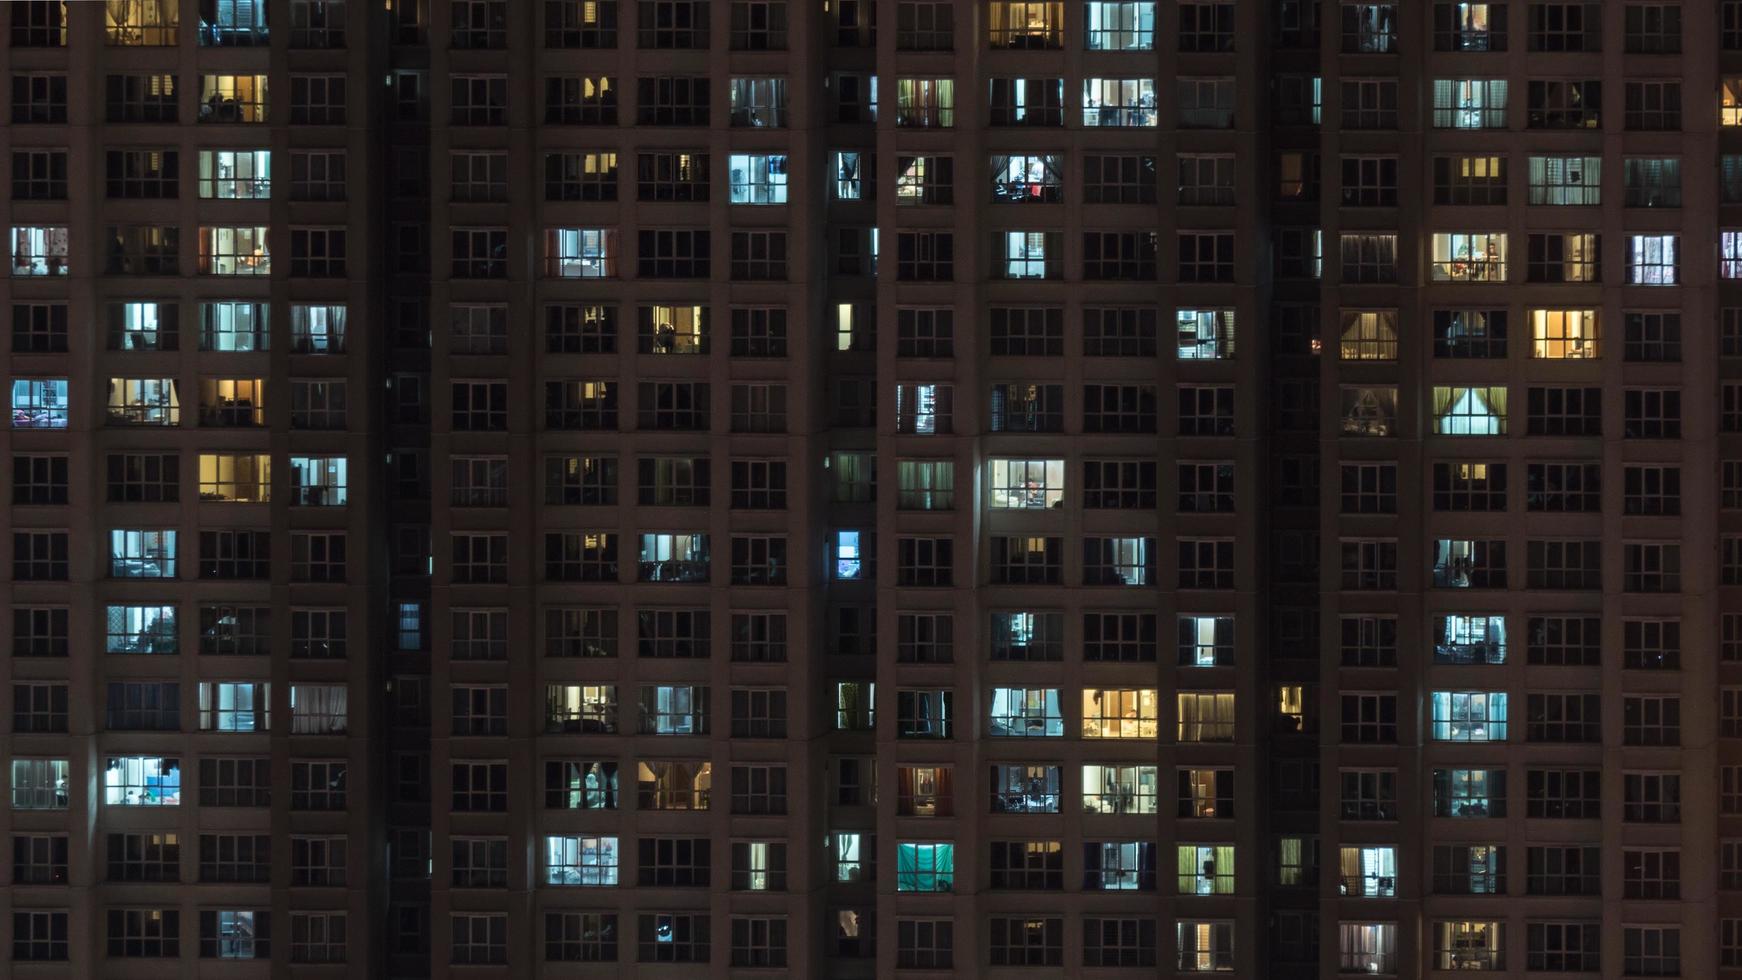 kuala lumpur, maleisië, 2020 - hoogbouw flatgebouw 's nachts foto